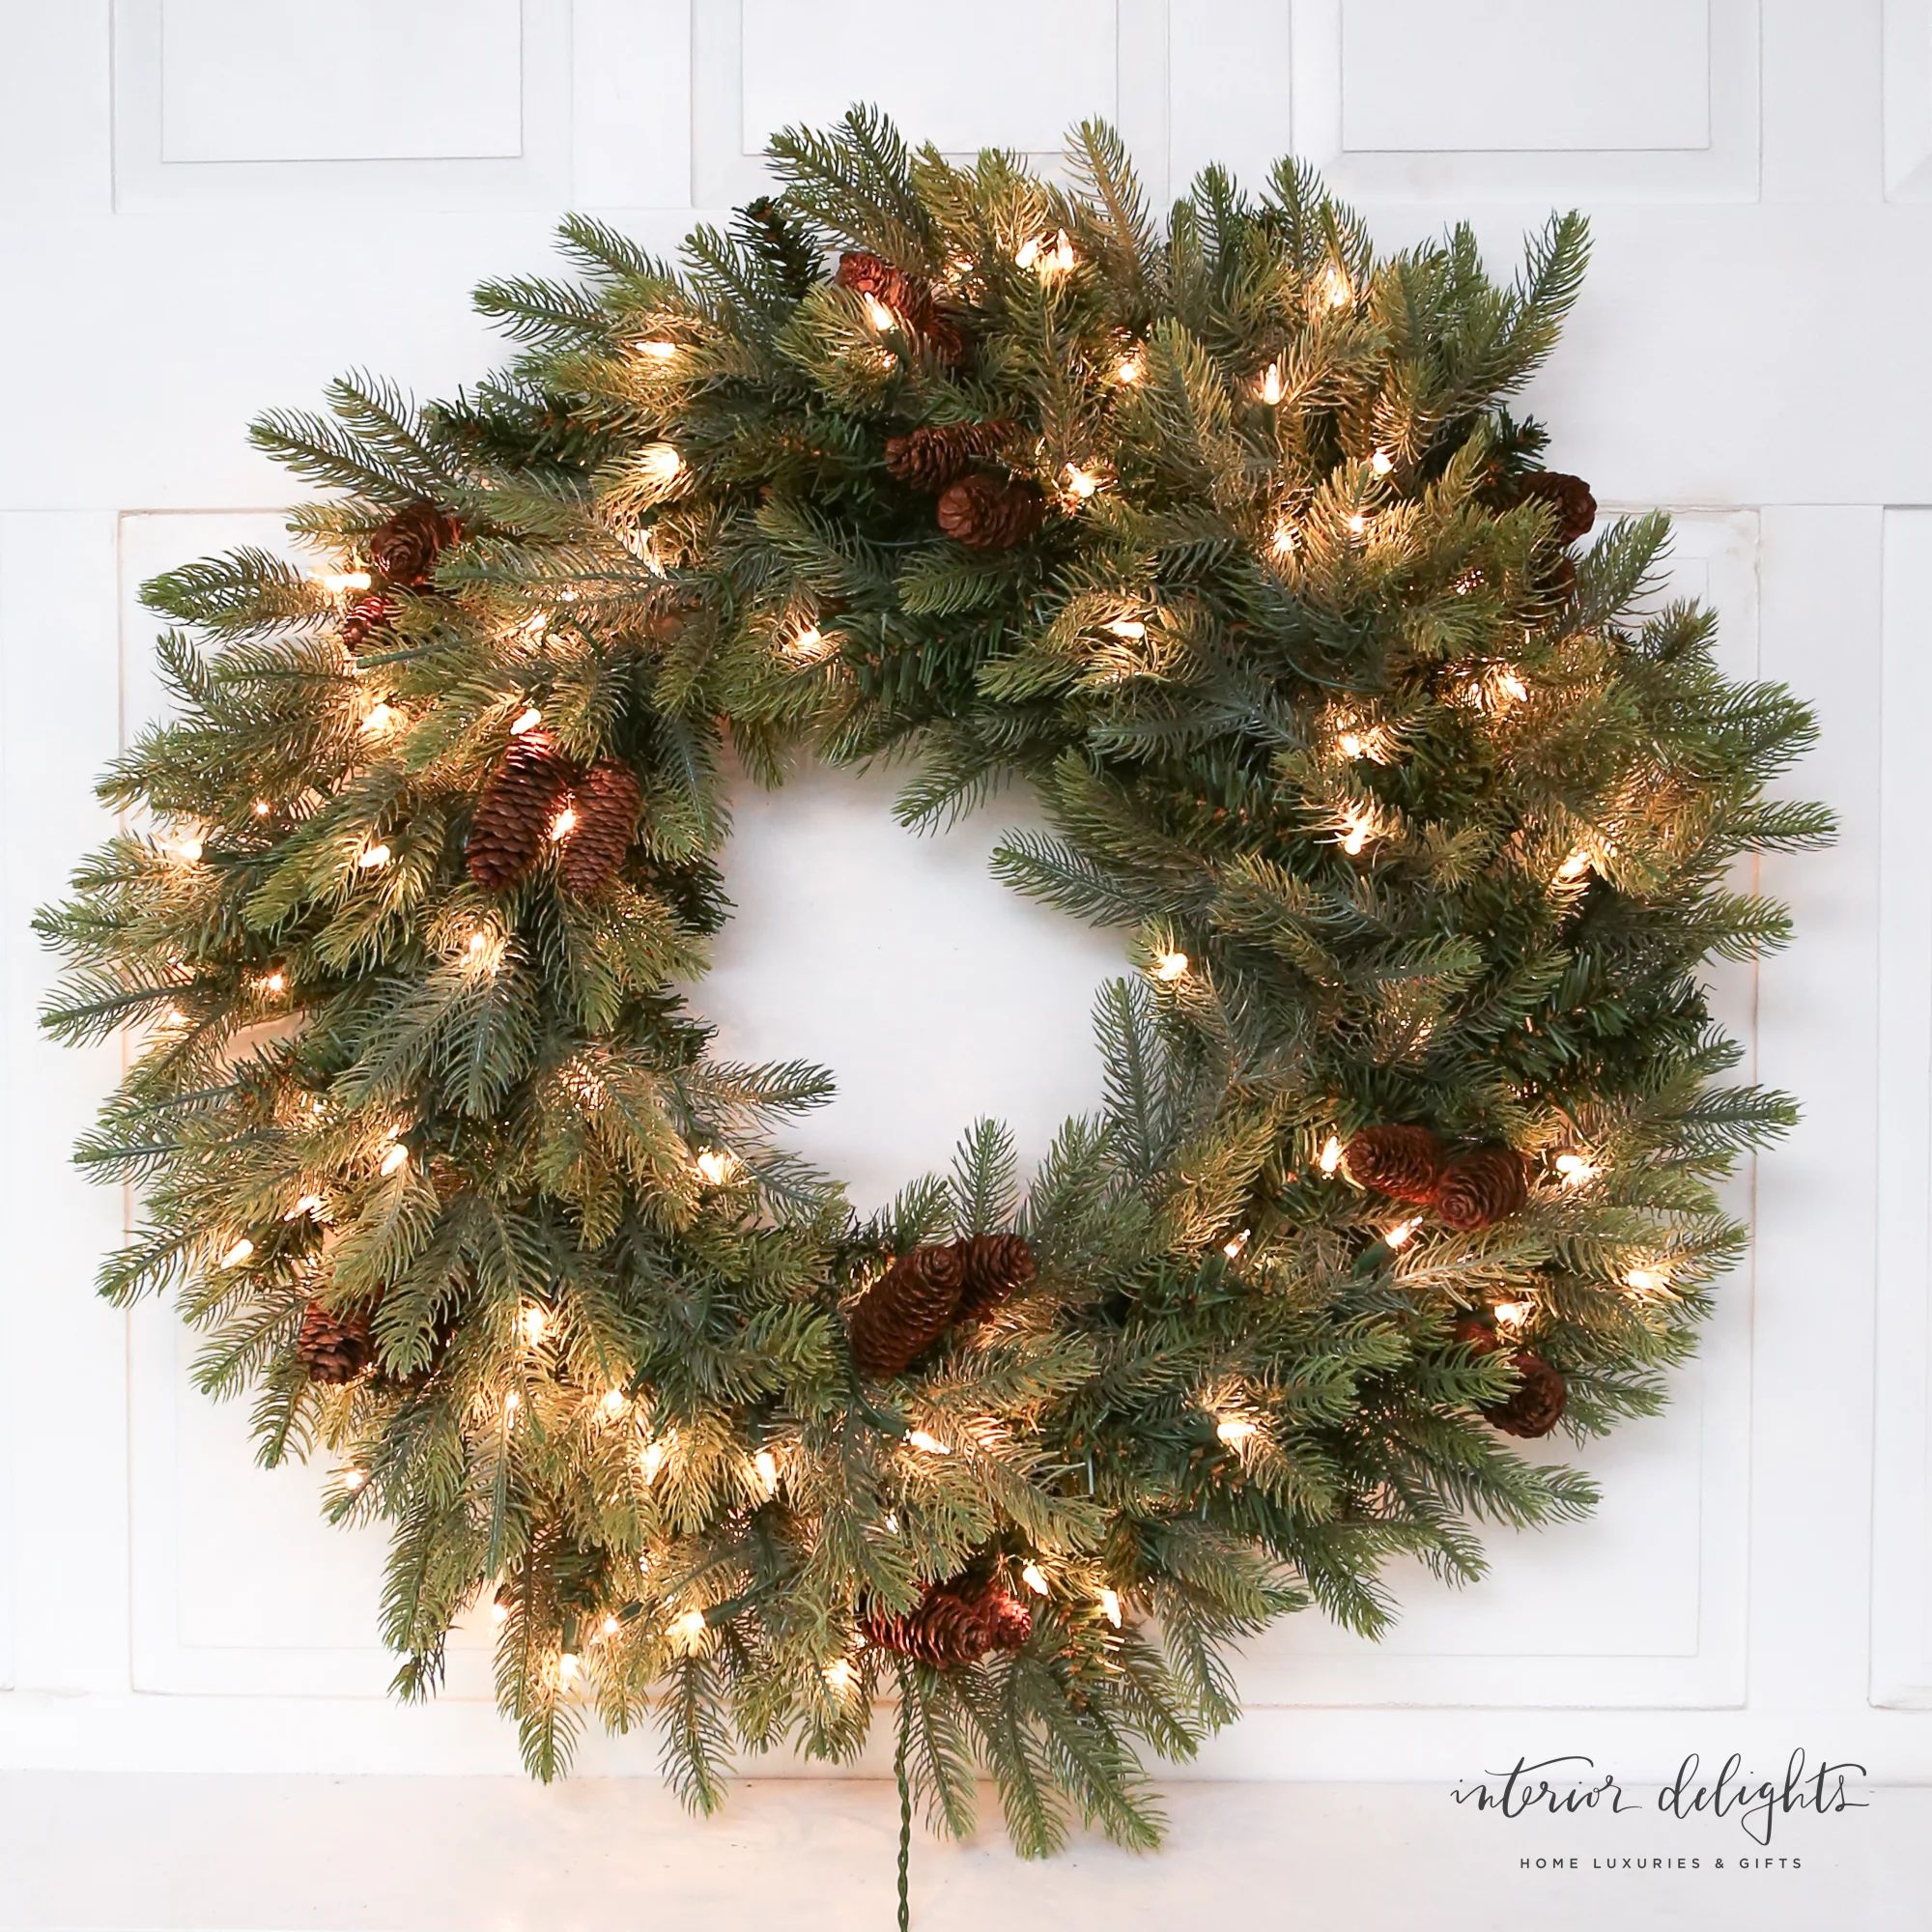 30" Pre-lit New England Pine Wreath with Pine Cones-50% OFF SALE | Interior Delights